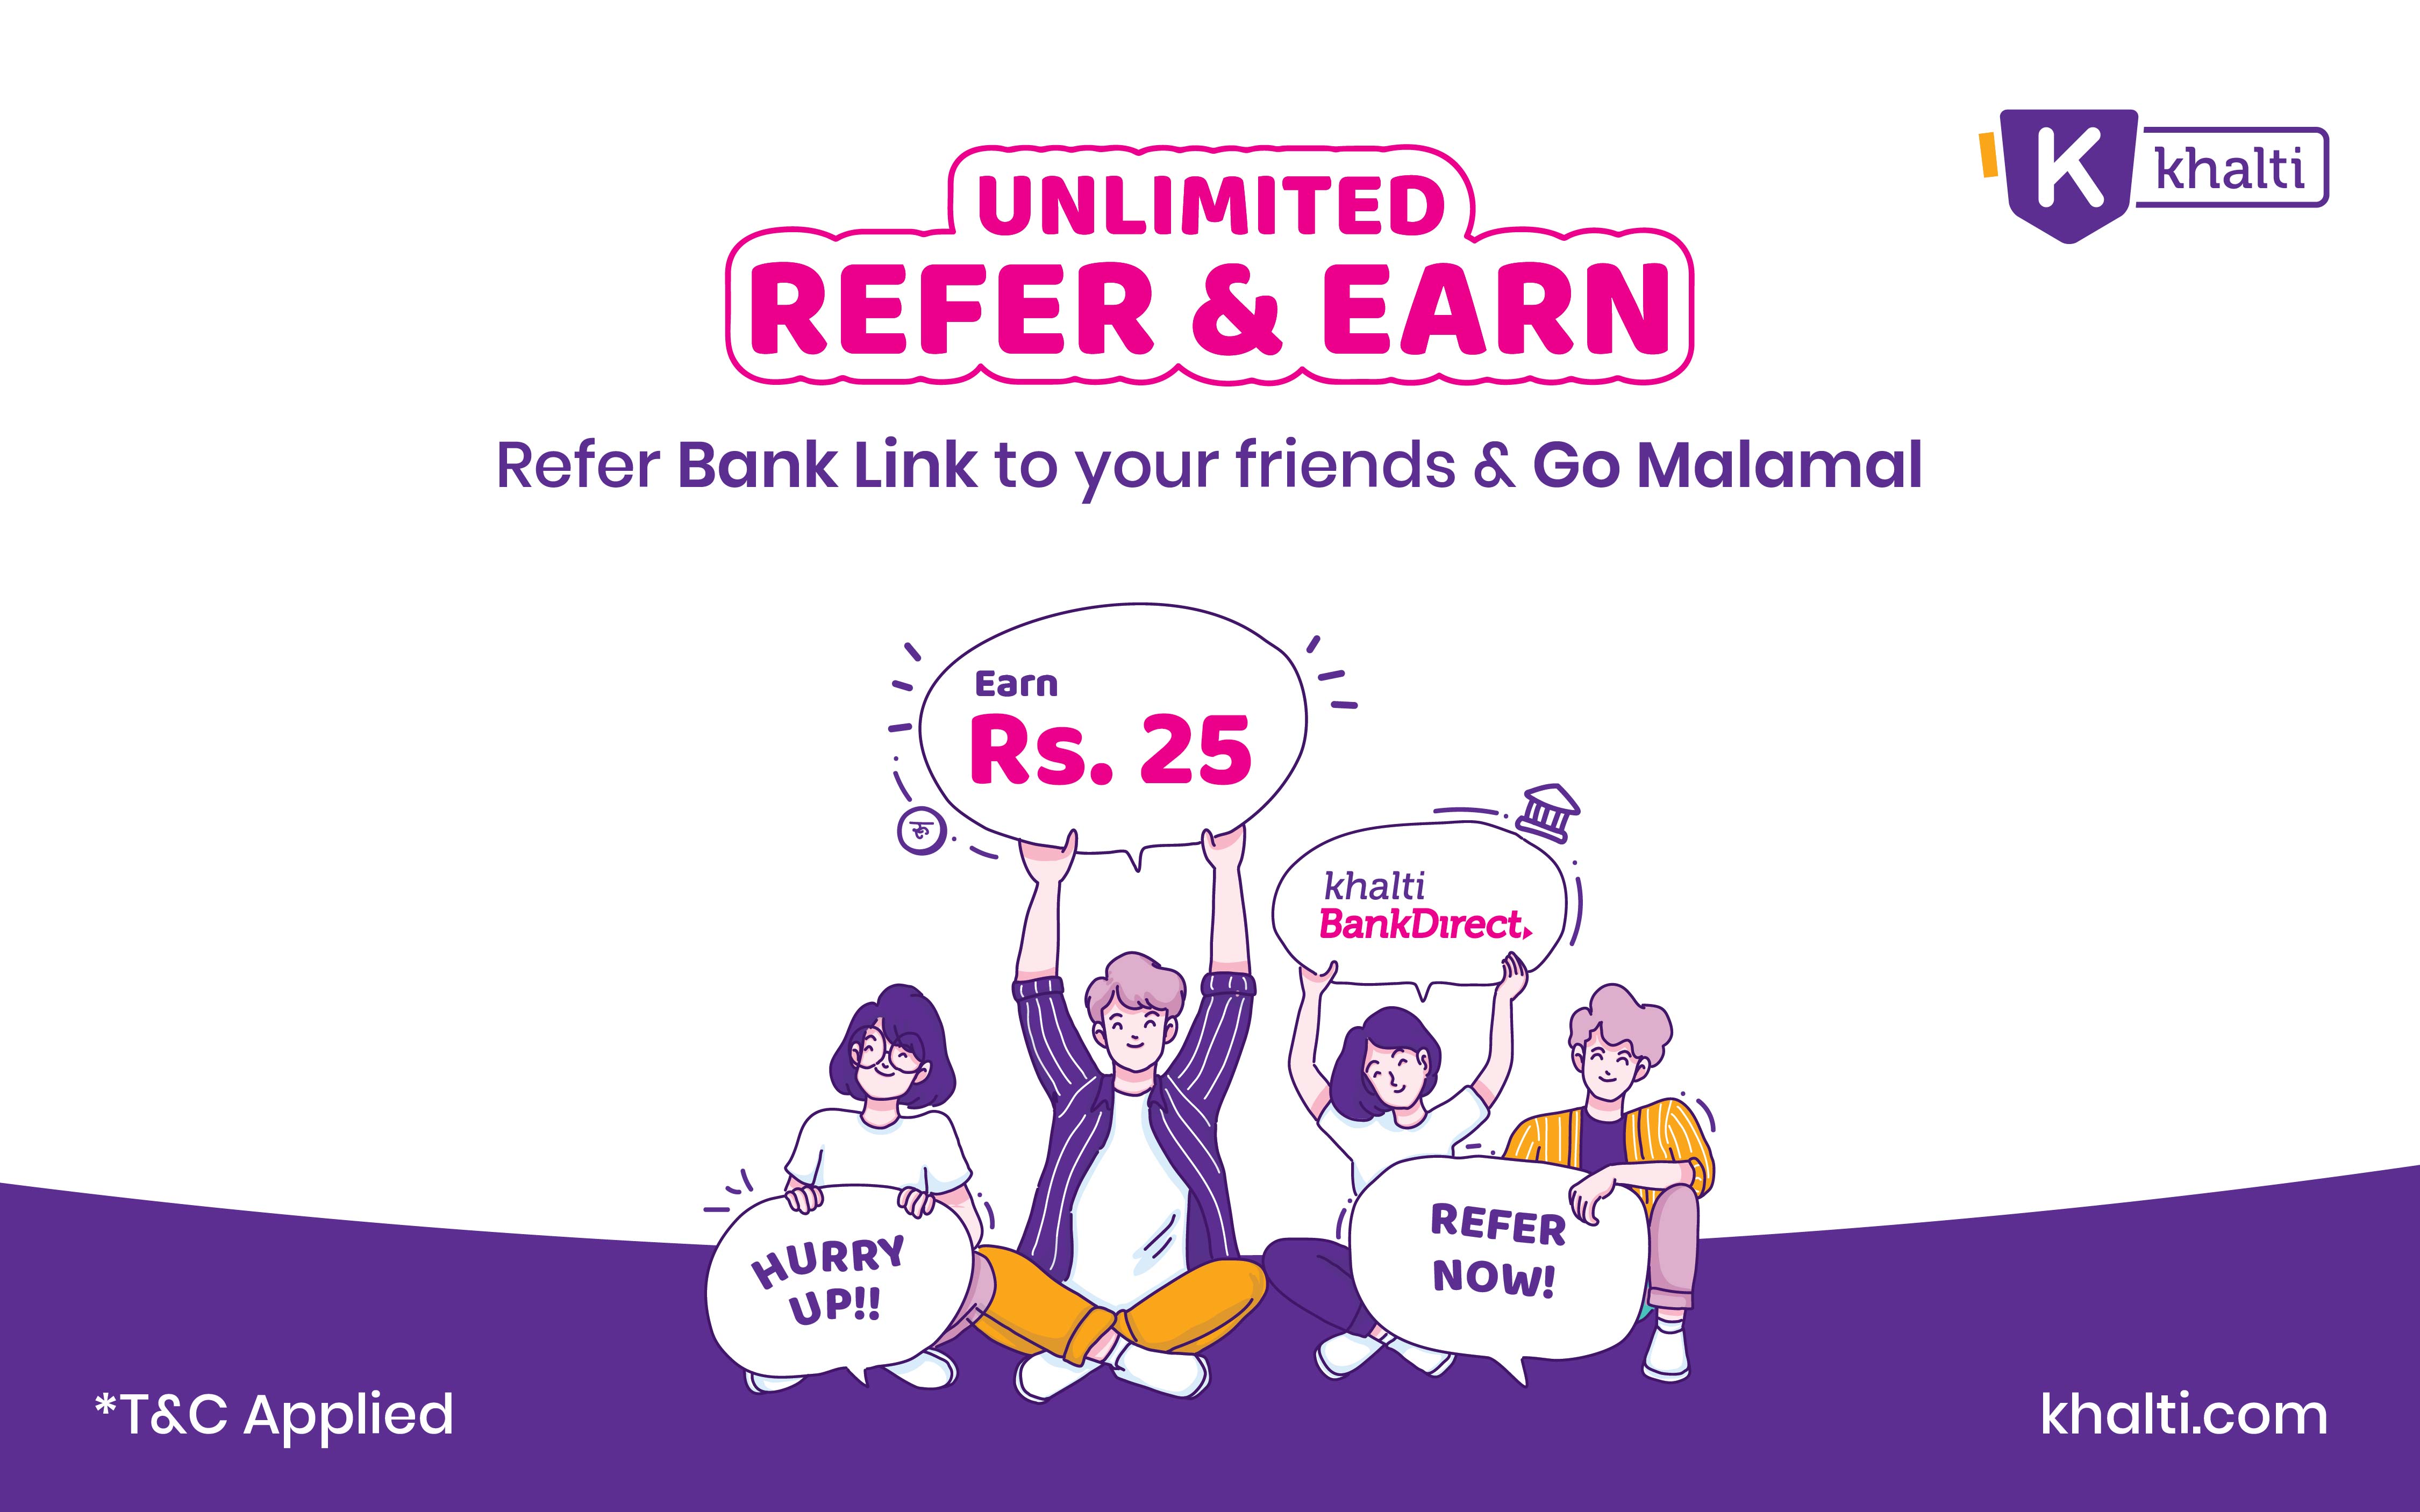 Khalti Bank Direct - Unlimited Refer & Unlimited Earn Offer